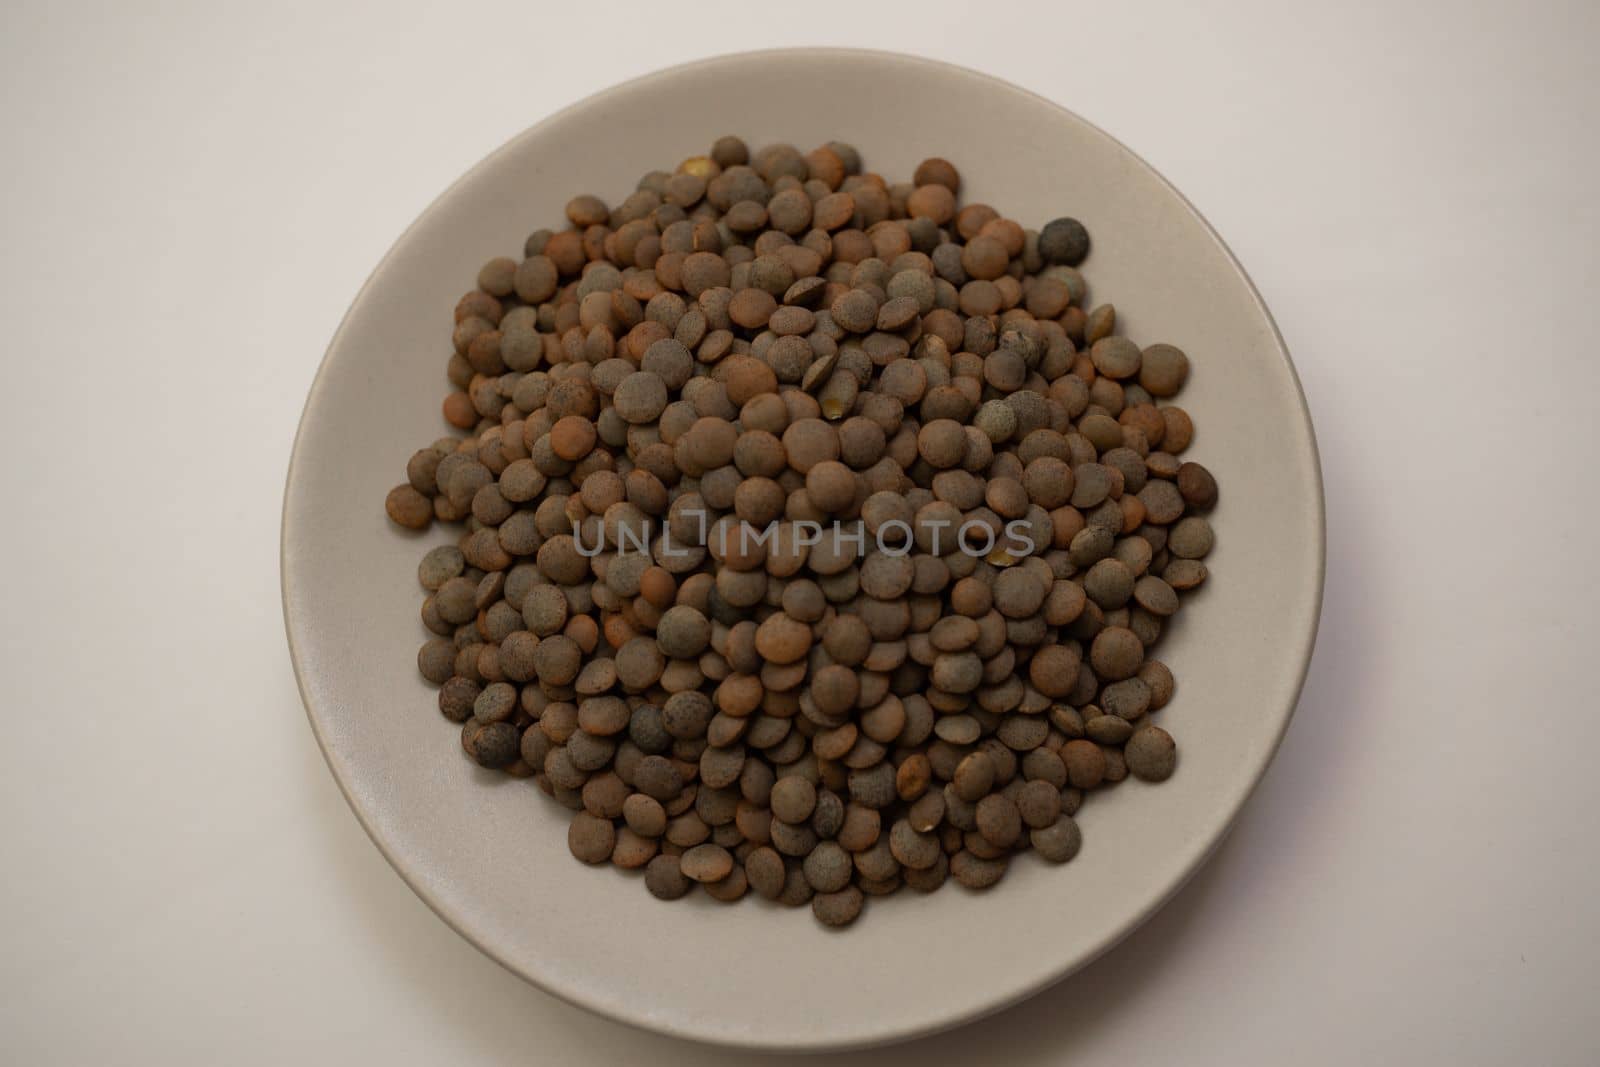 pardina lentils on a white plate by joseantona